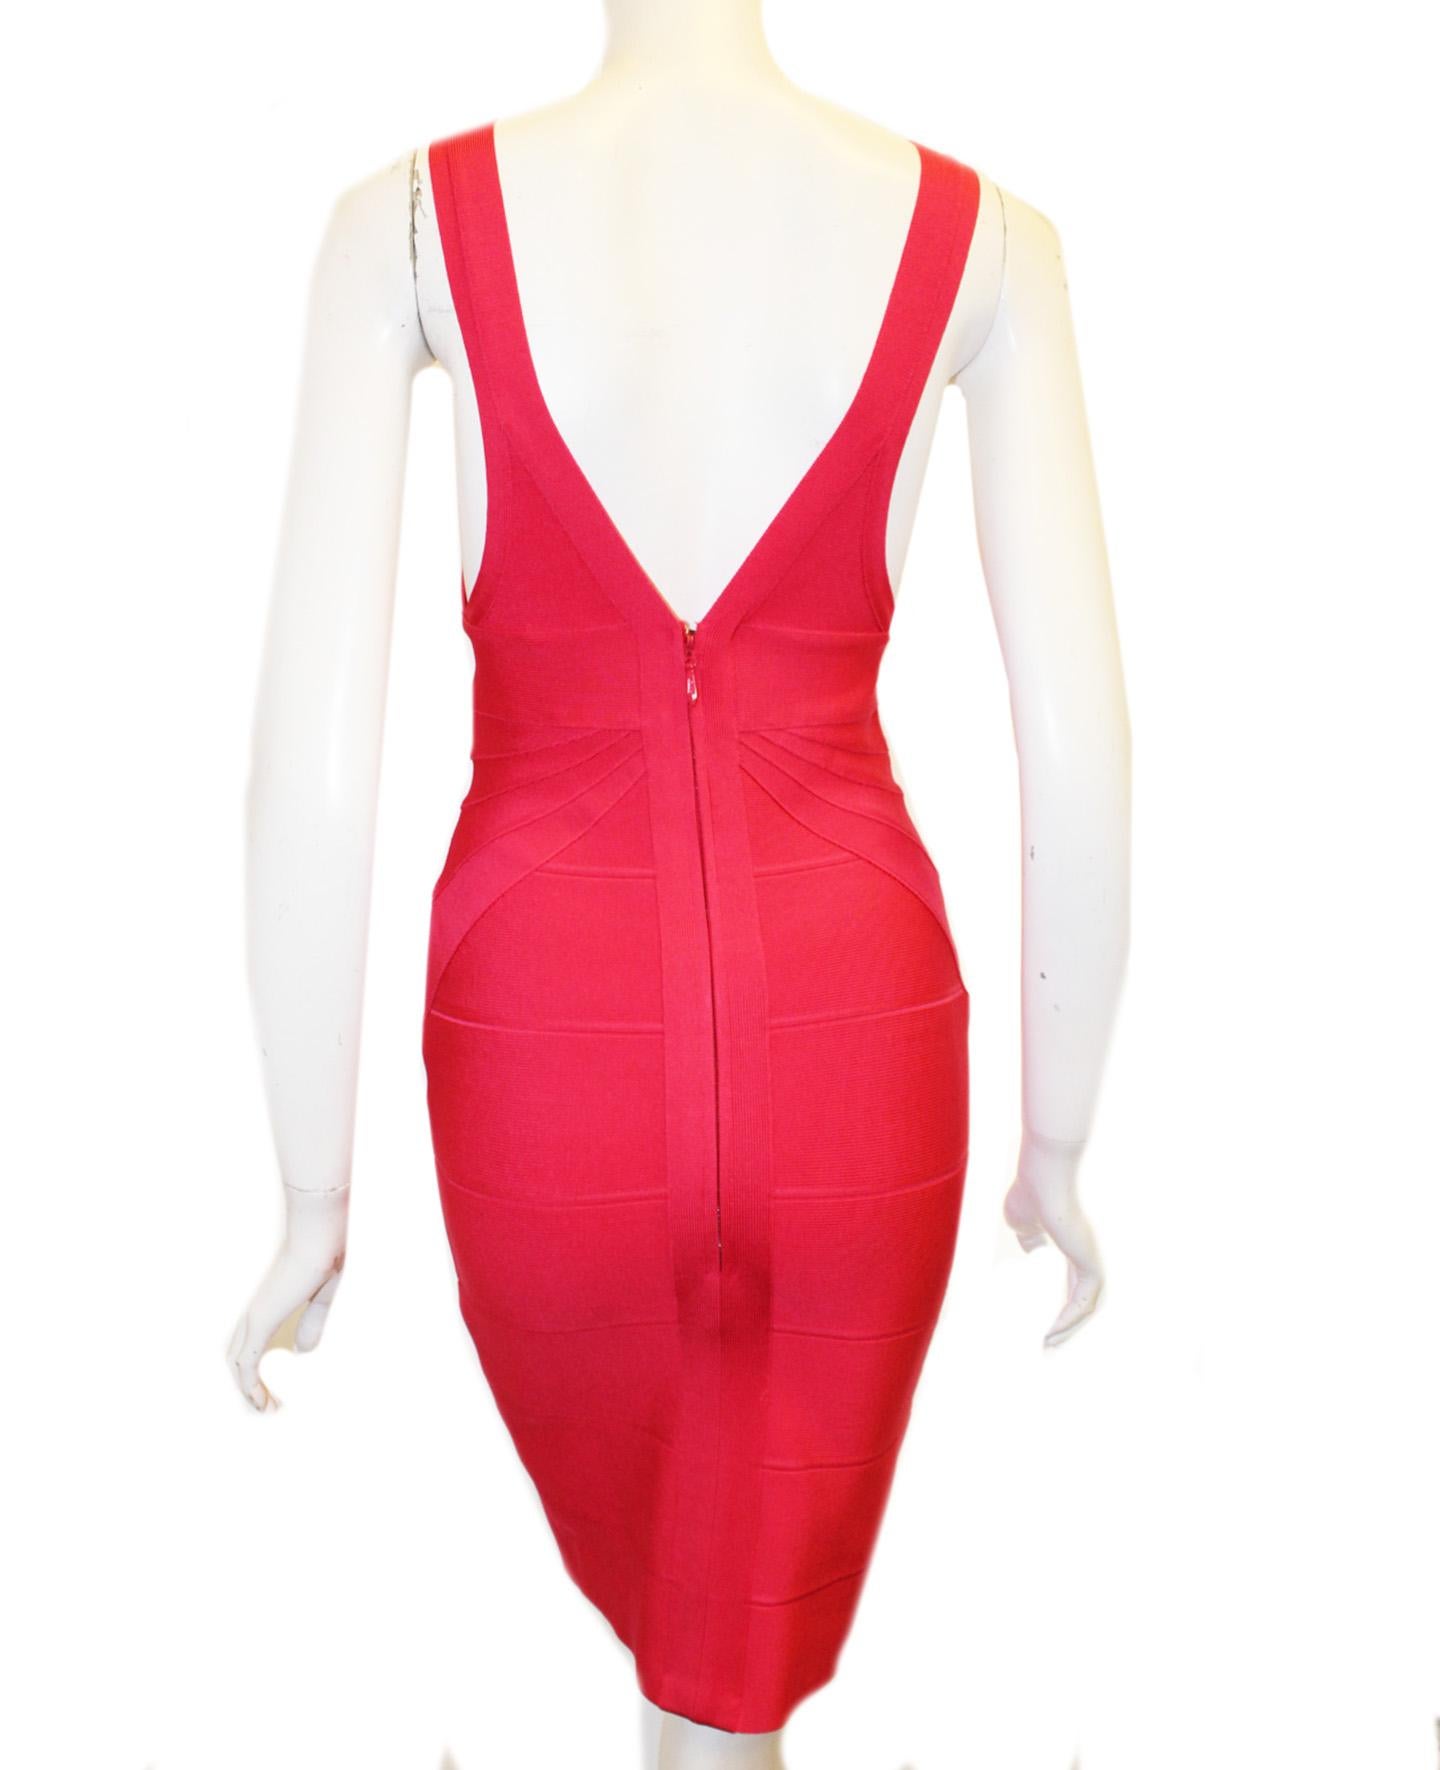 Herve Leger hot pink bandage V neck body con dress is a closet essential.  Named 